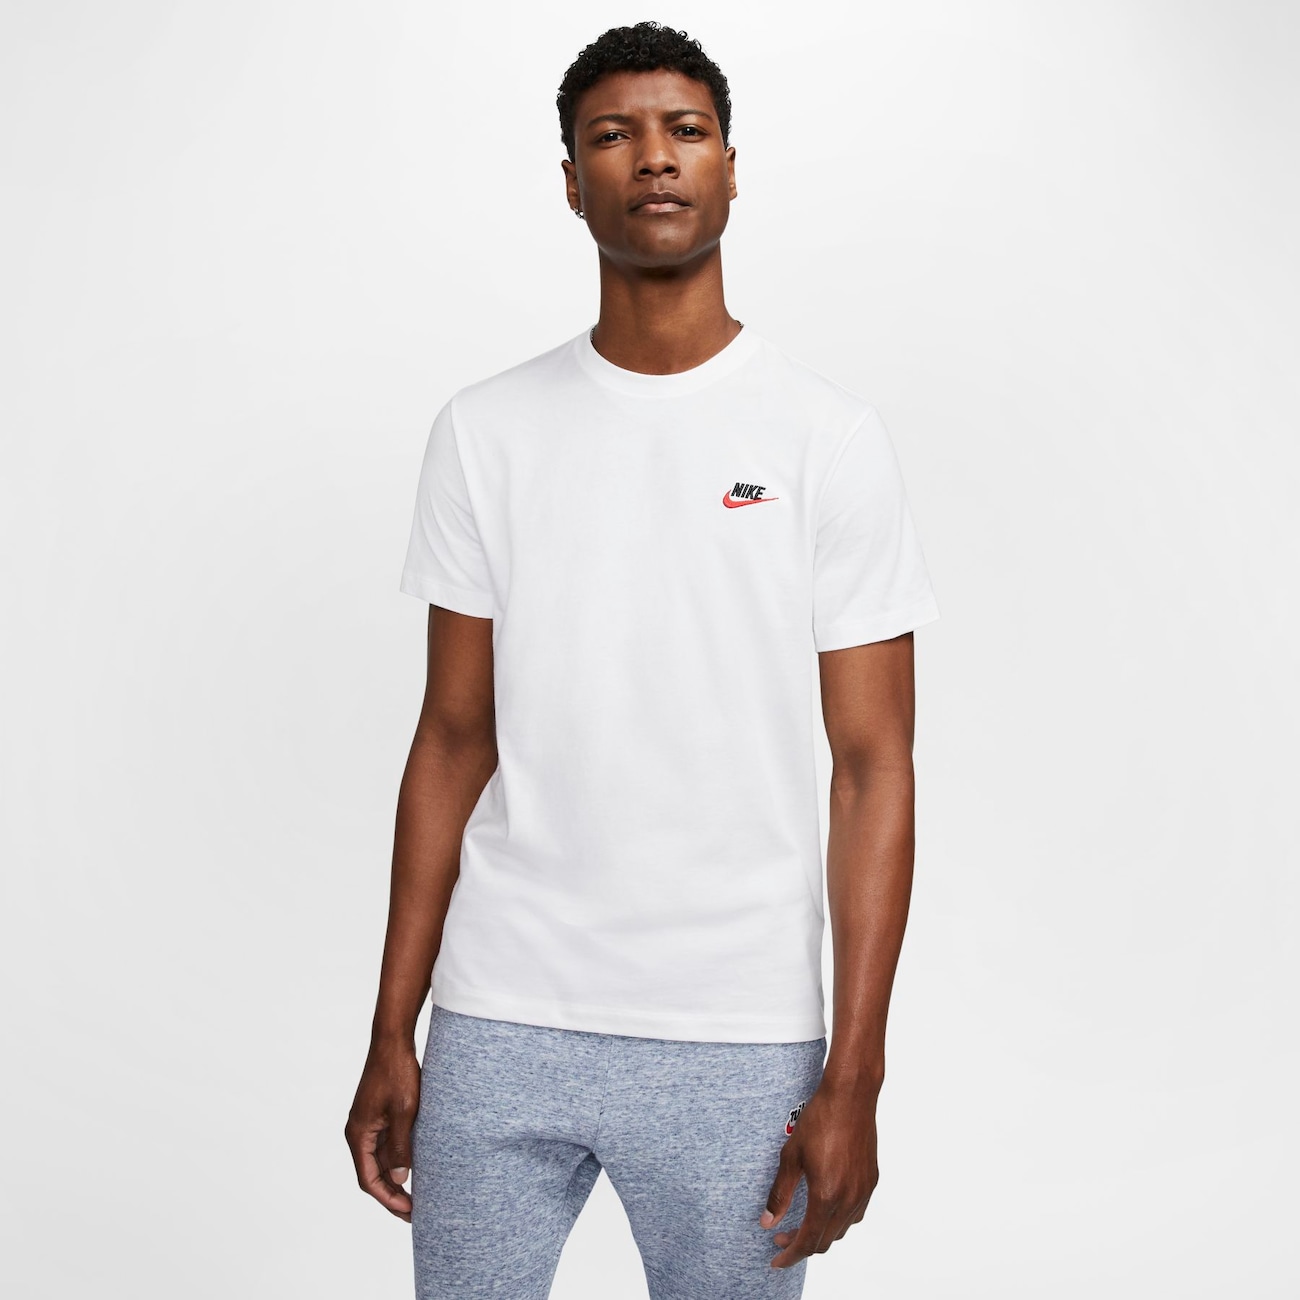 Camiseta Nike Sportswear Club Masculina disponível na Loja Averse